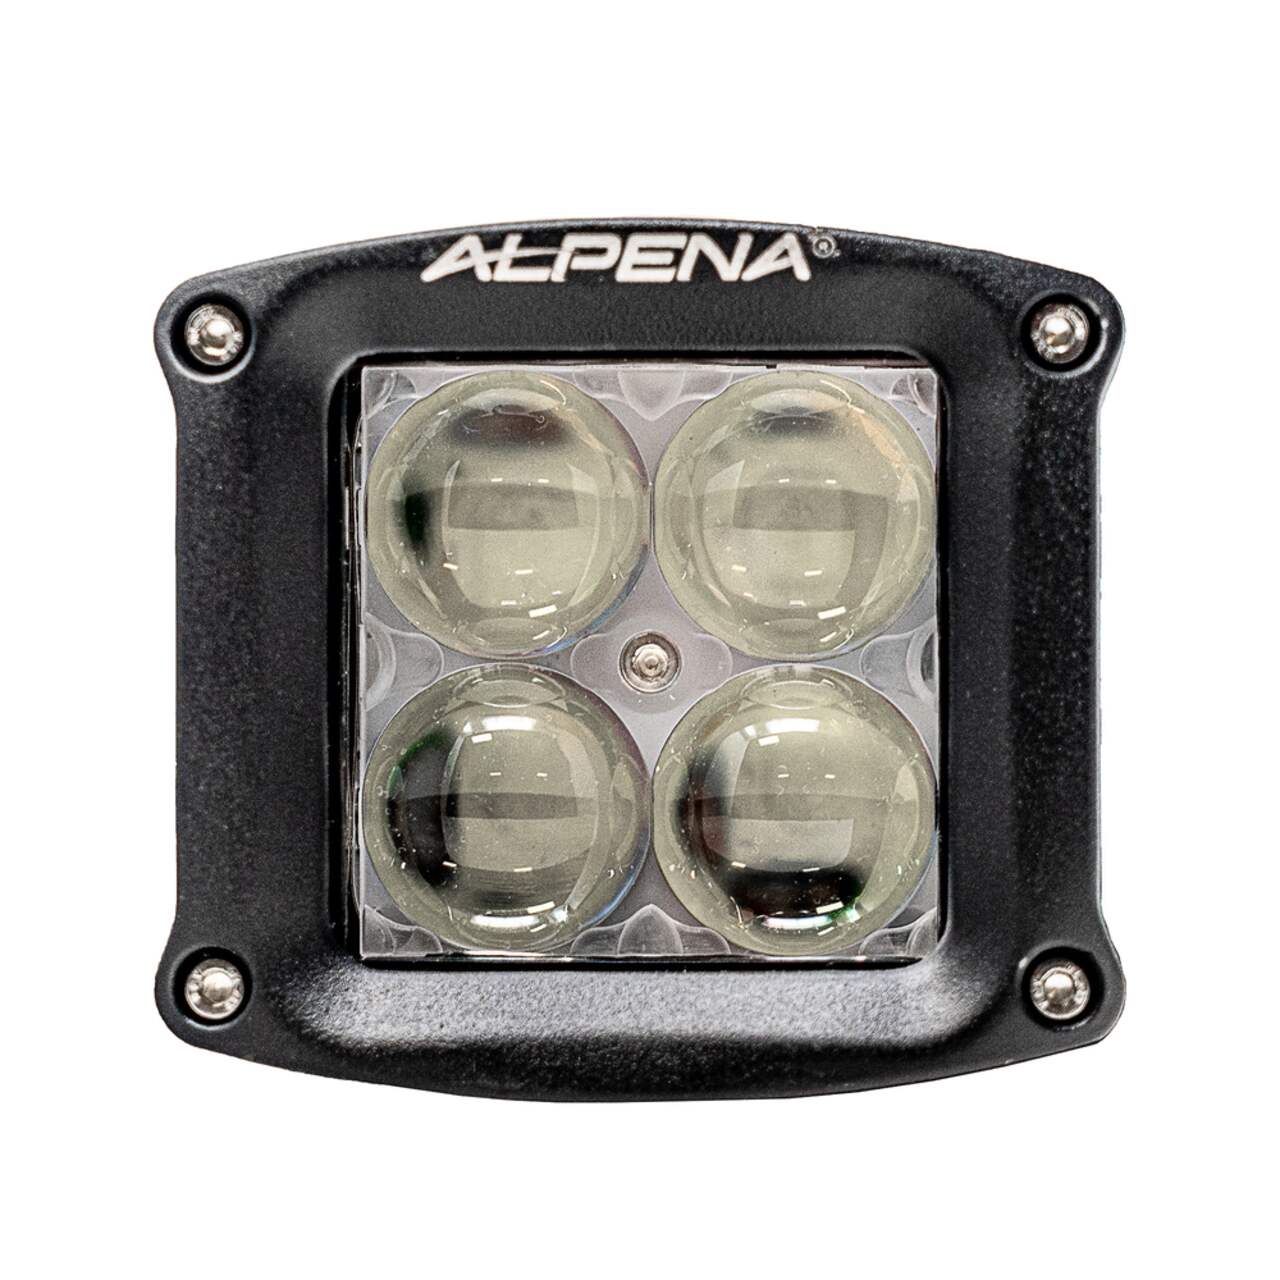 Alpena Auto LED Mobile App